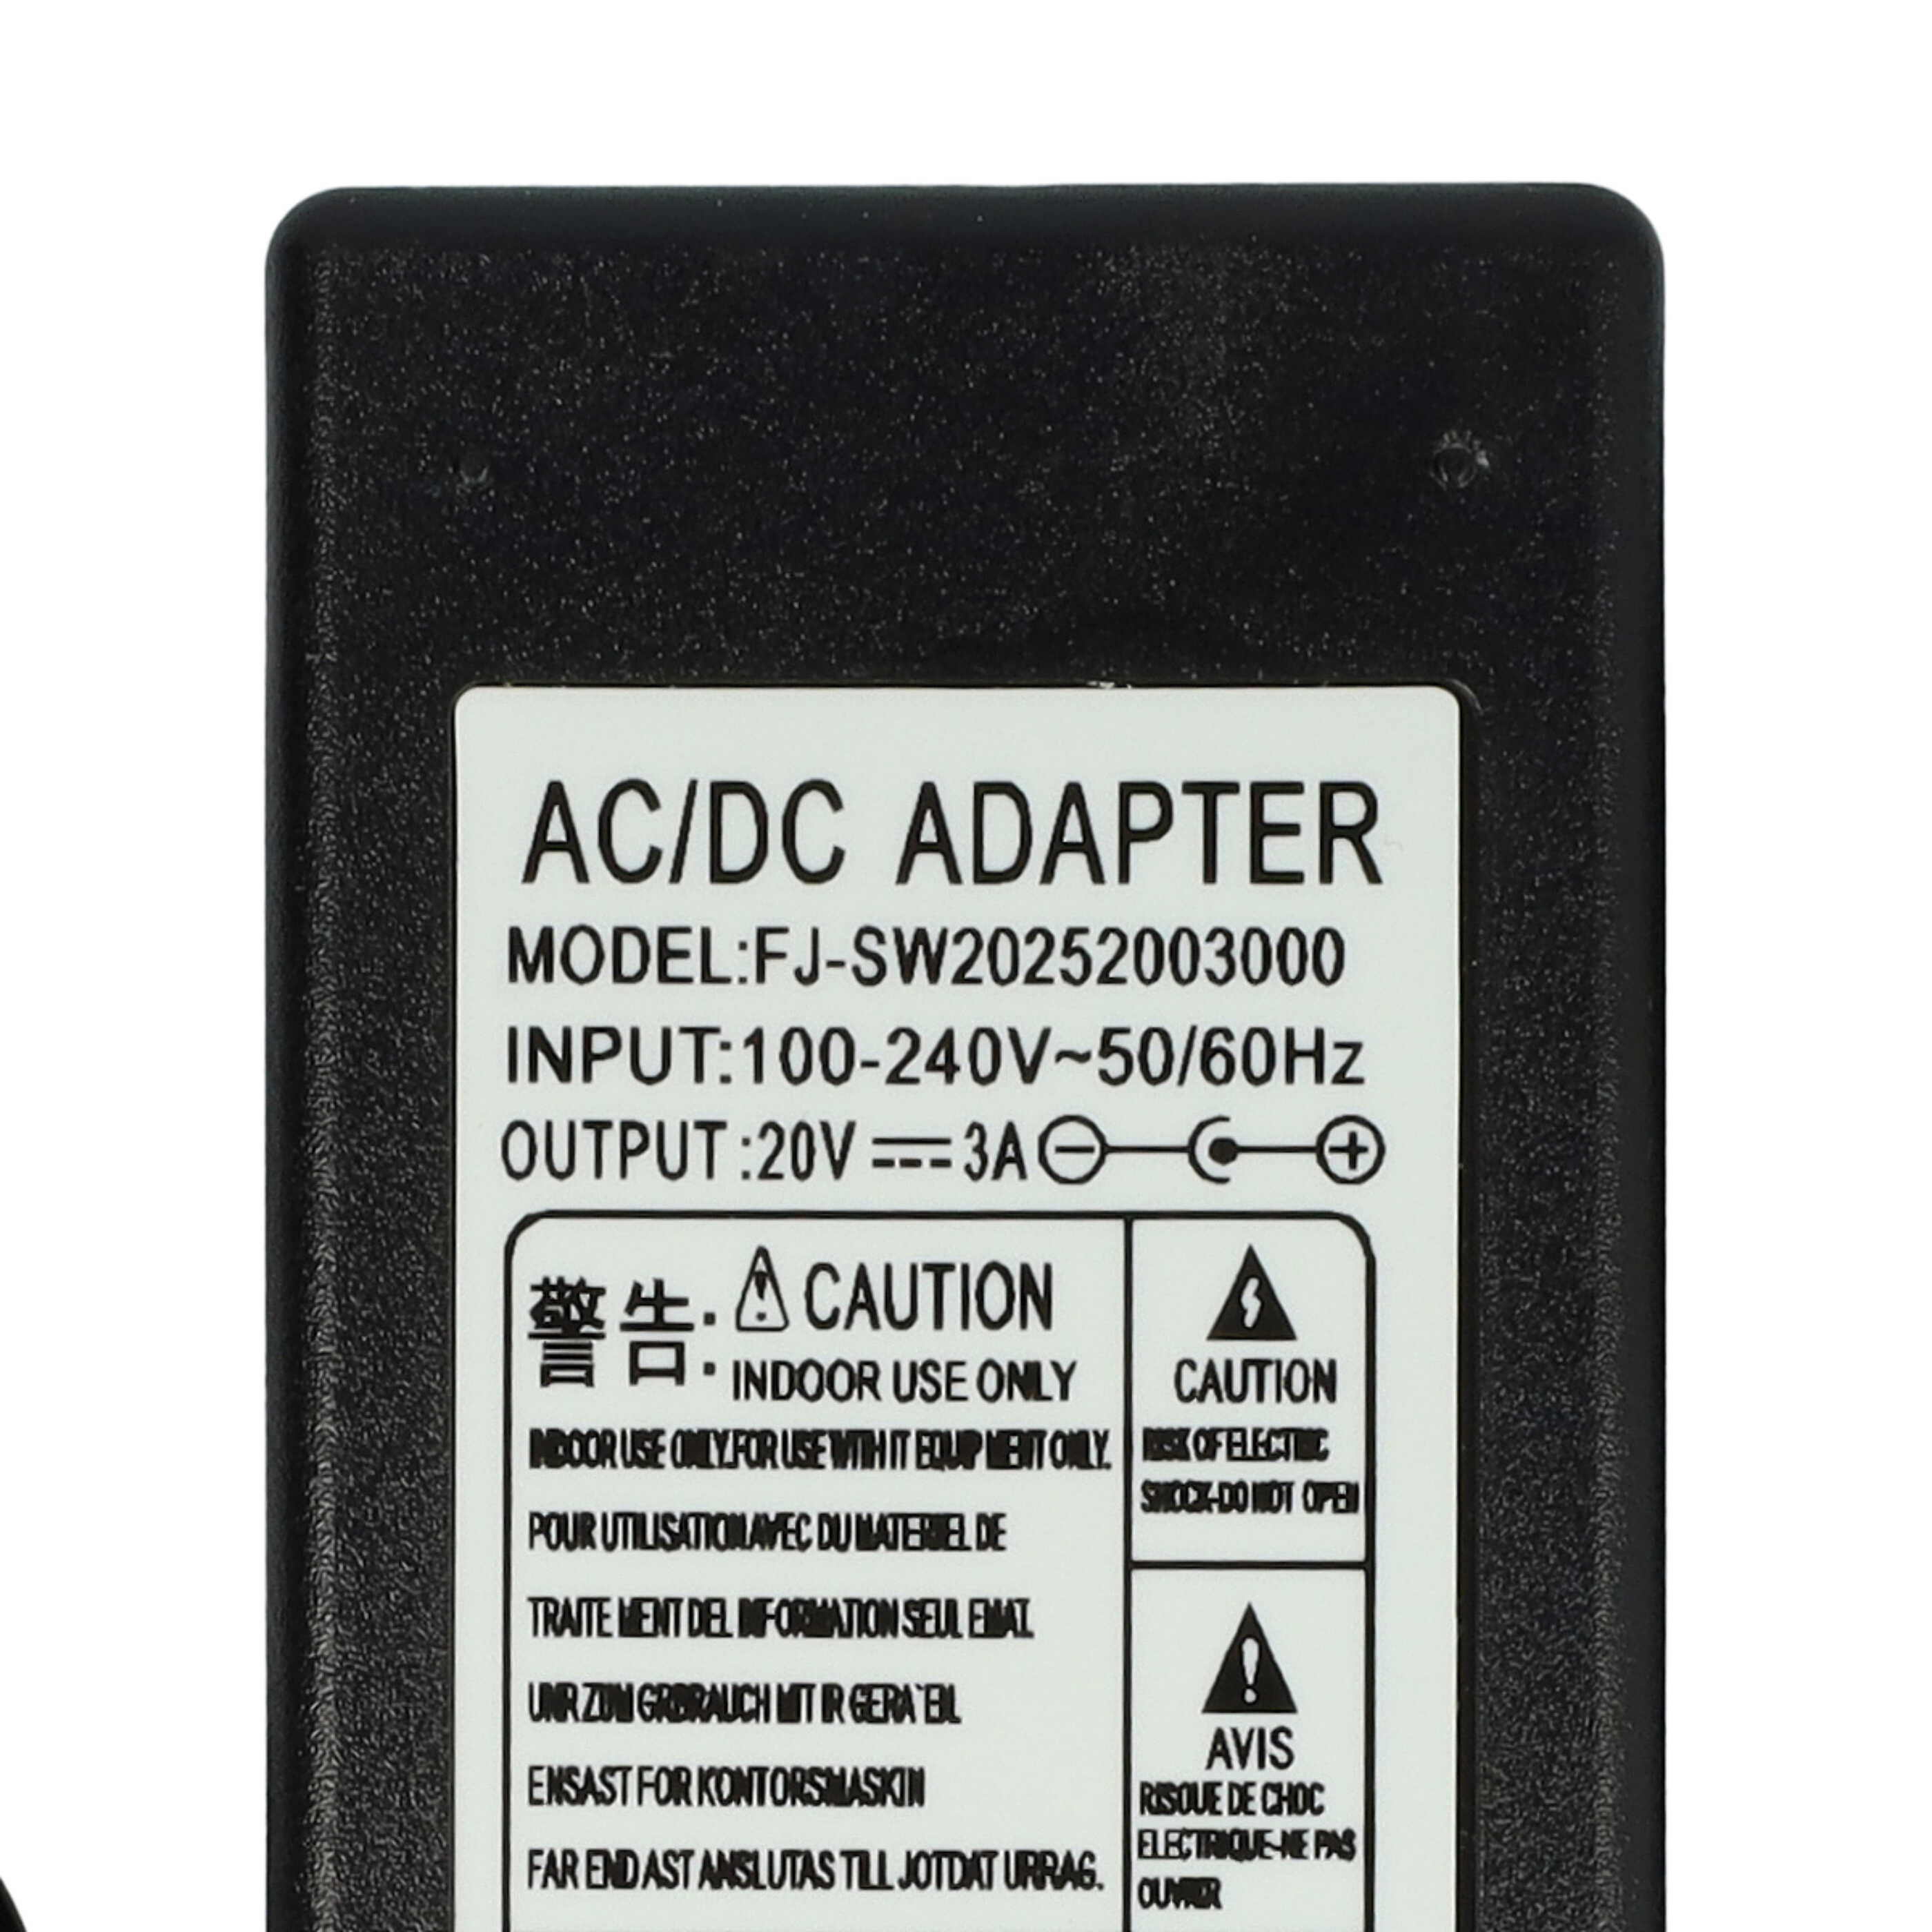 Mains Power Adapter replaces Zebra 0335A2065 for Zebra Labelling Machine - DC 20 V